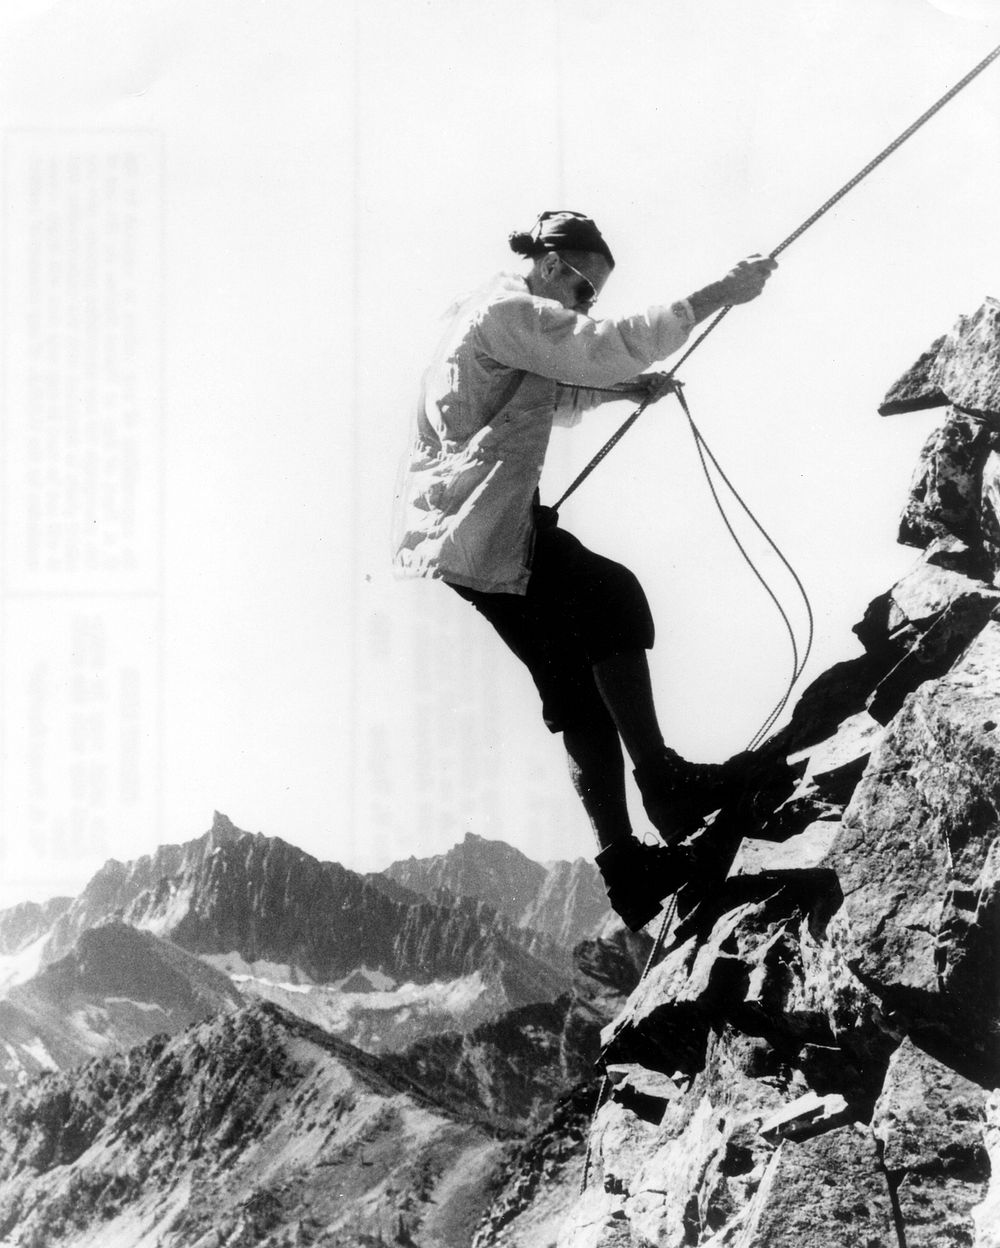 Rock Climber, Okanogan NF, WA 1968. Original public domain image from Flickr